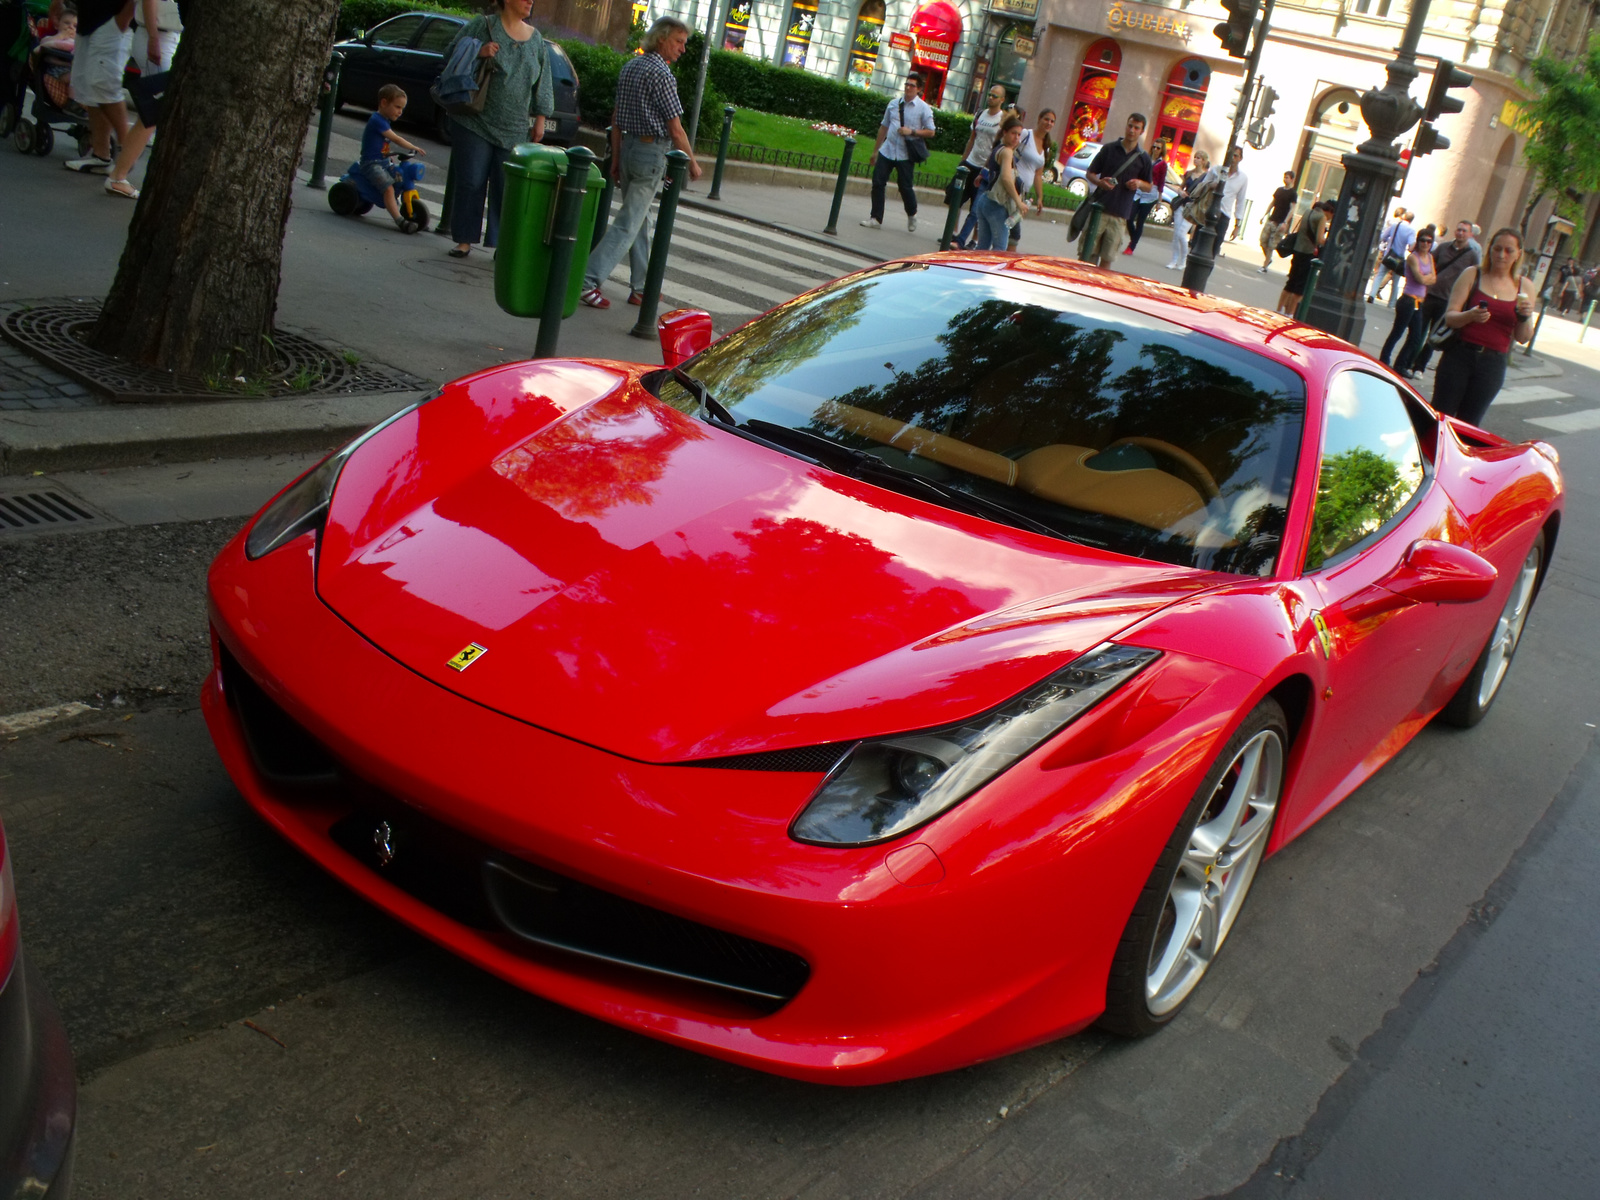 Ferrari 458 Italia + videó :)